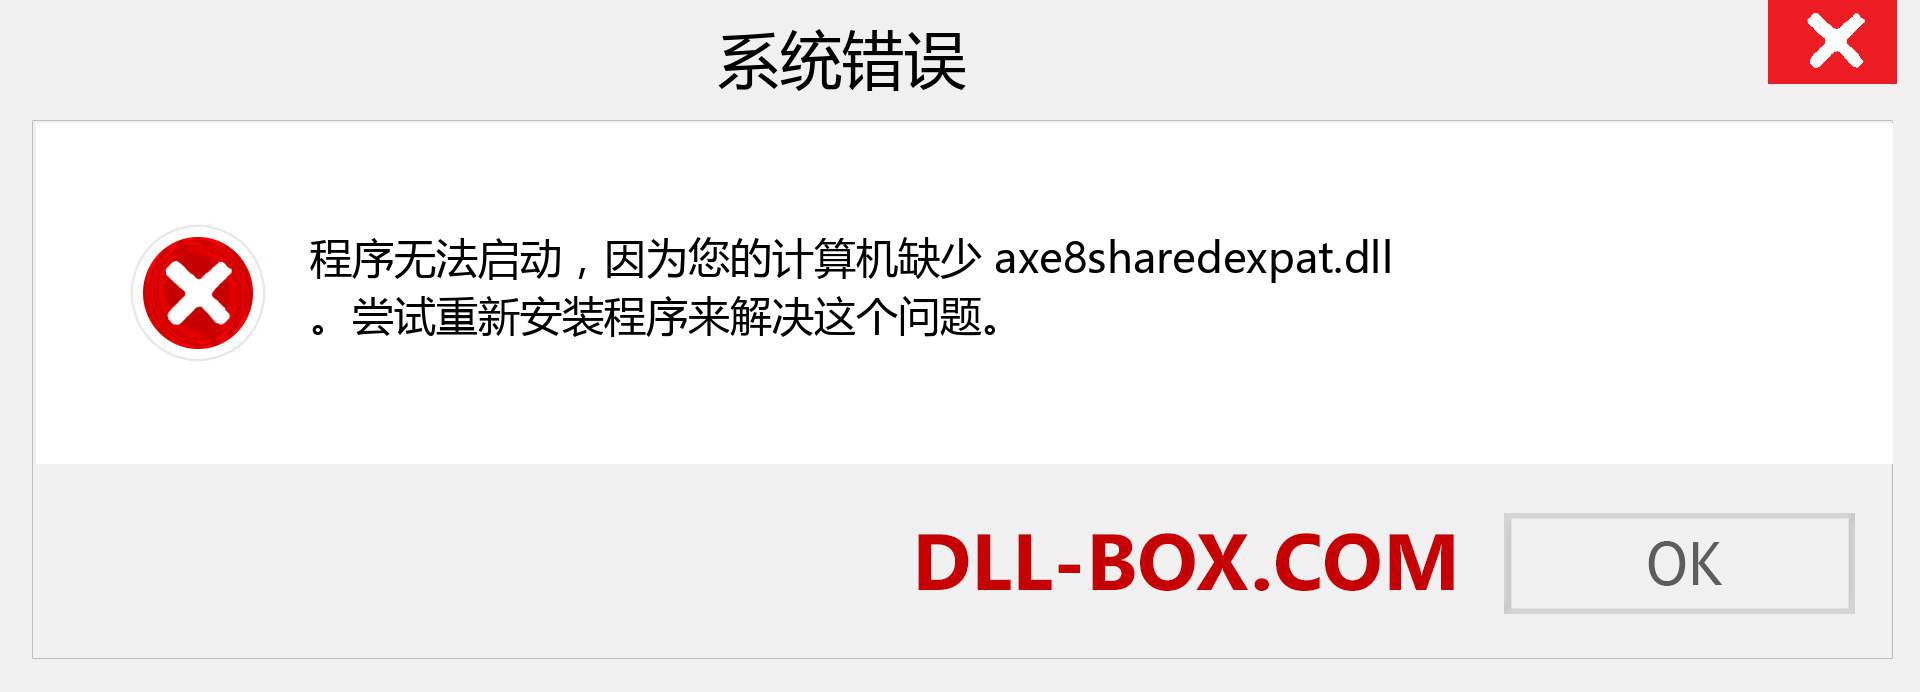 axe8sharedexpat.dll 文件丢失？。 适用于 Windows 7、8、10 的下载 - 修复 Windows、照片、图像上的 axe8sharedexpat dll 丢失错误